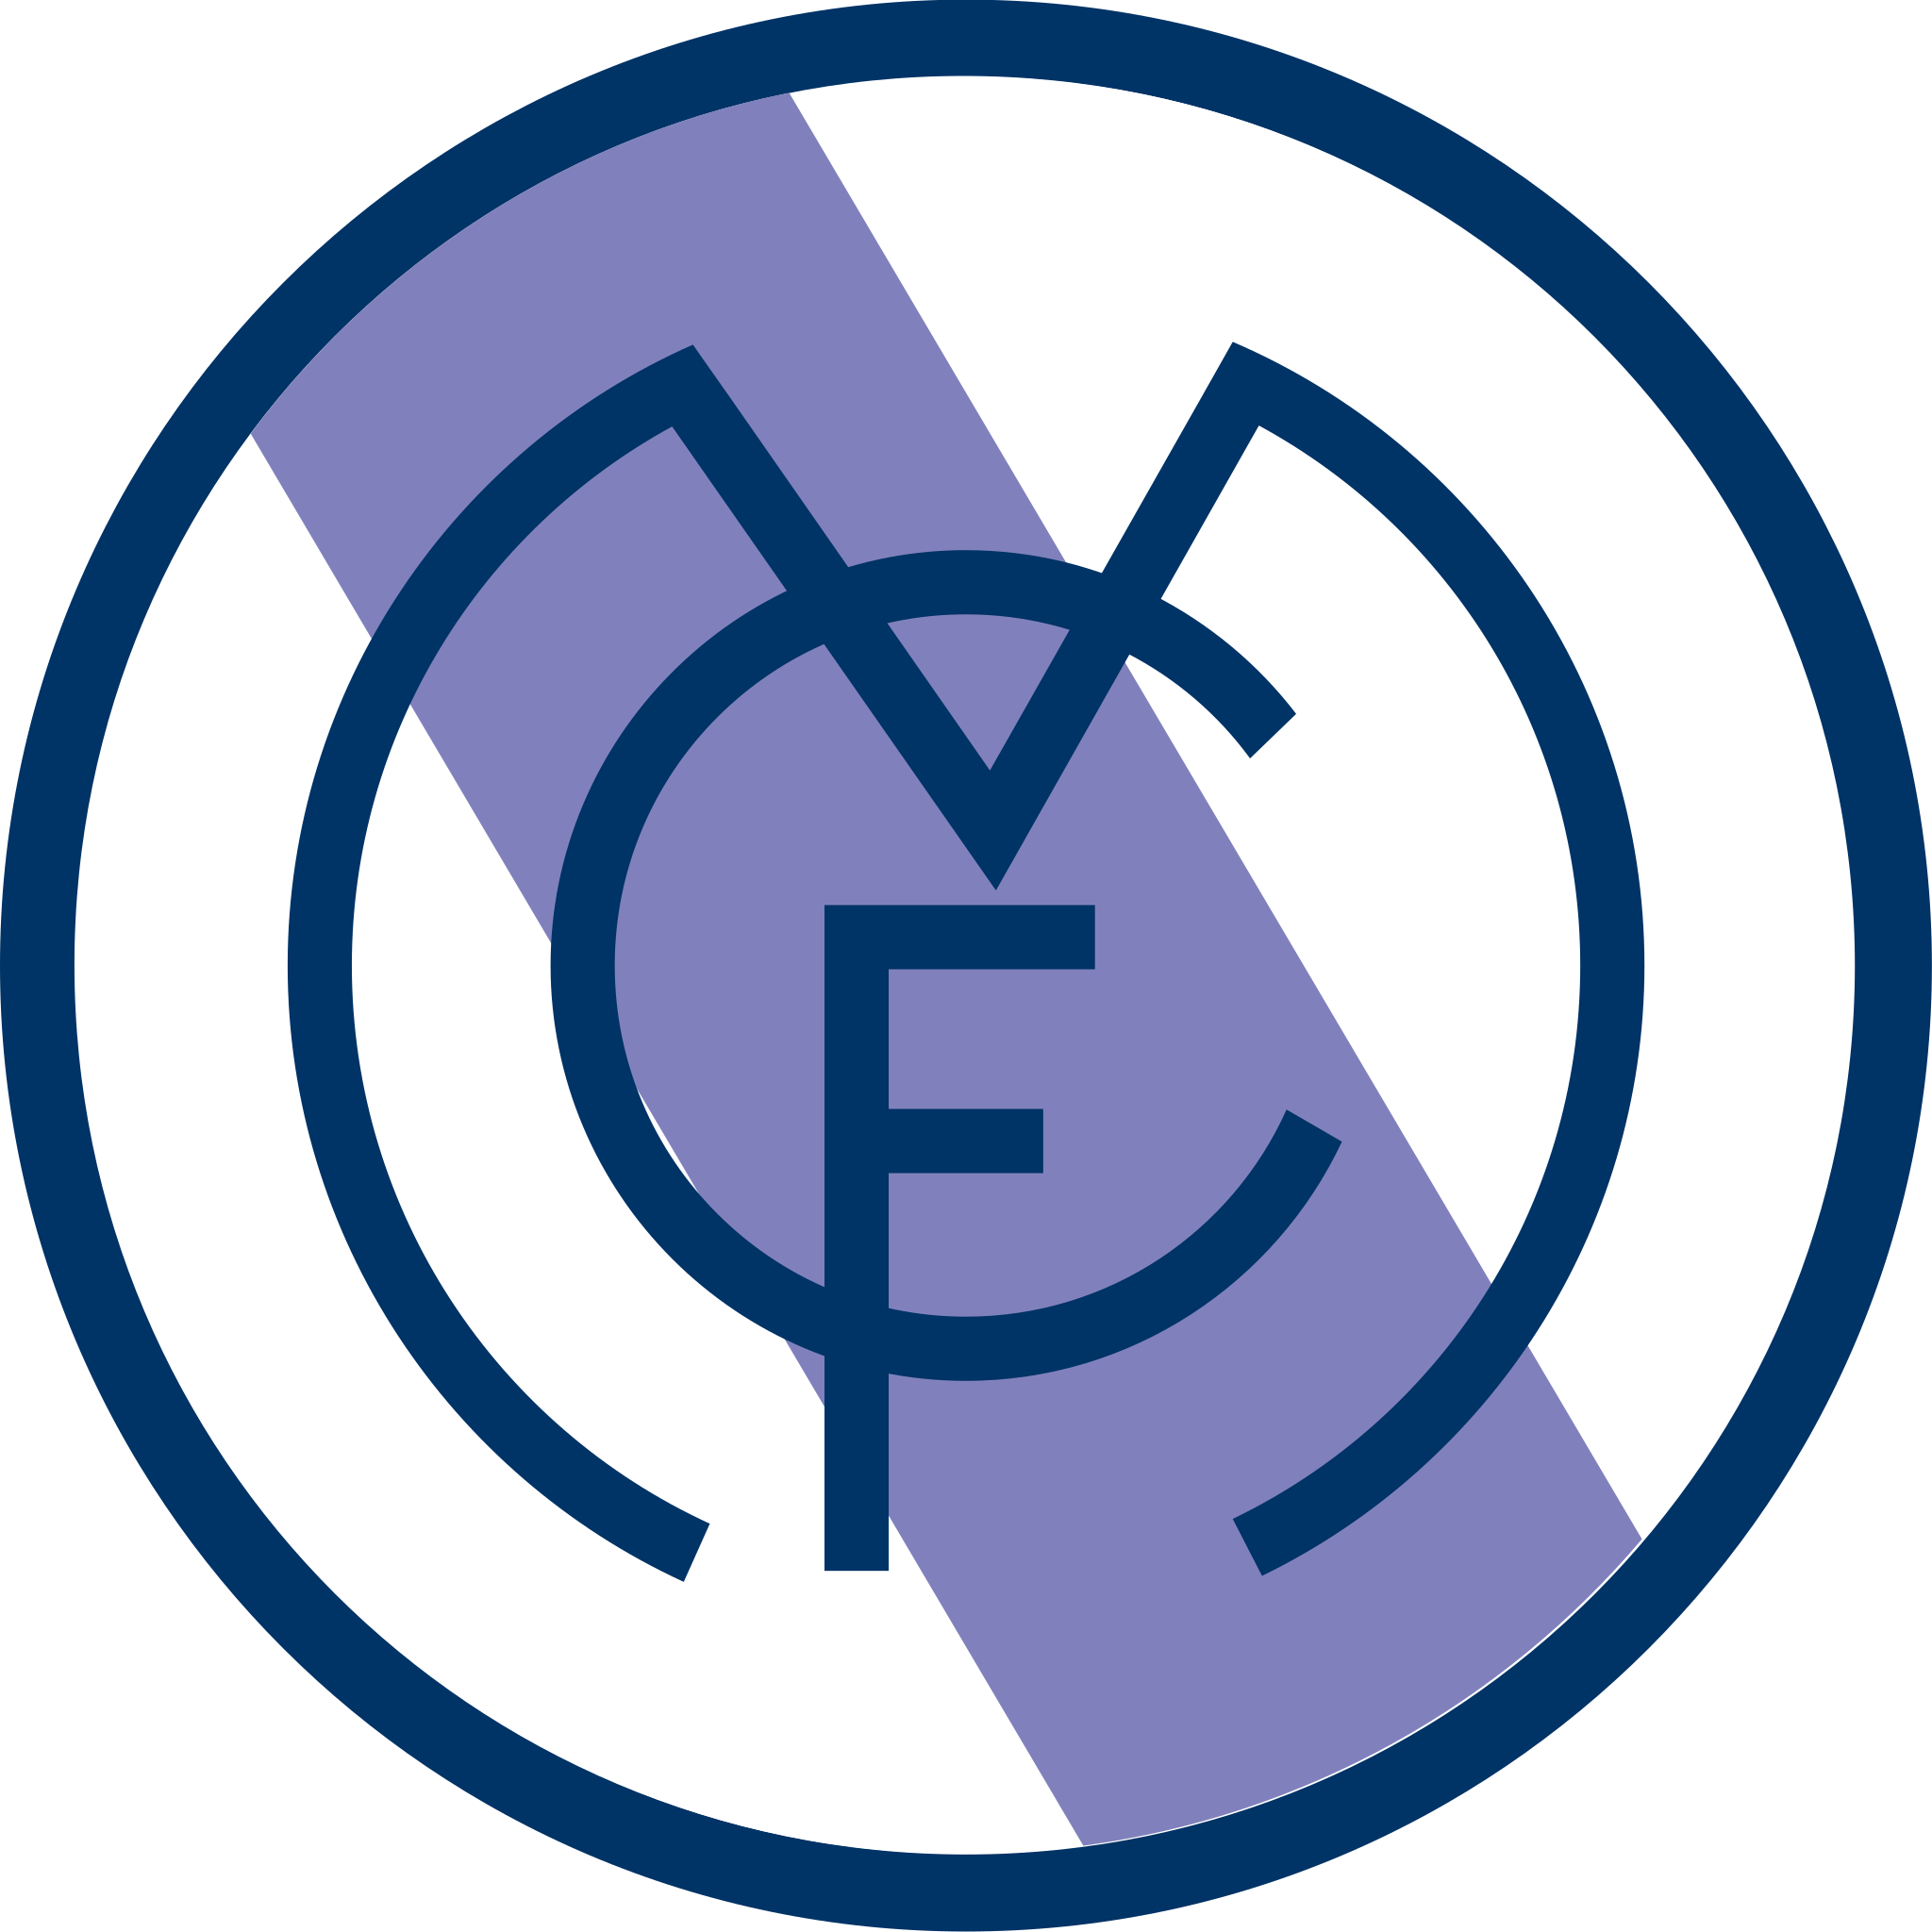 File:Real Madrid CF (ancien logo).svg - Wikimedia Commons